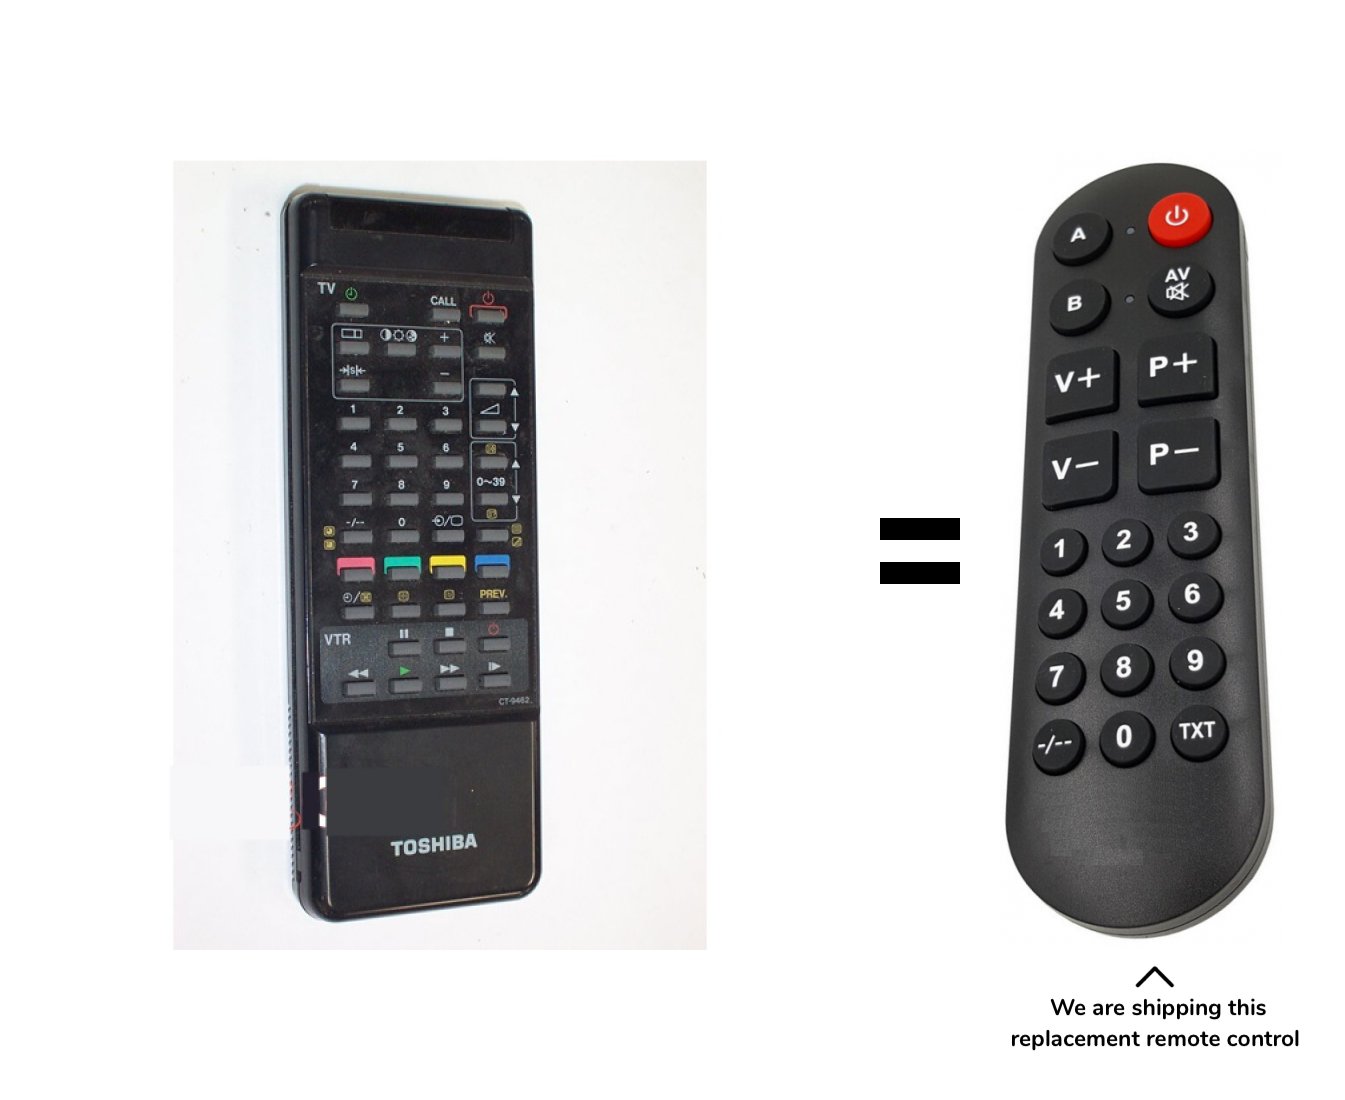 Toshiba 1400TB remote control for seniors